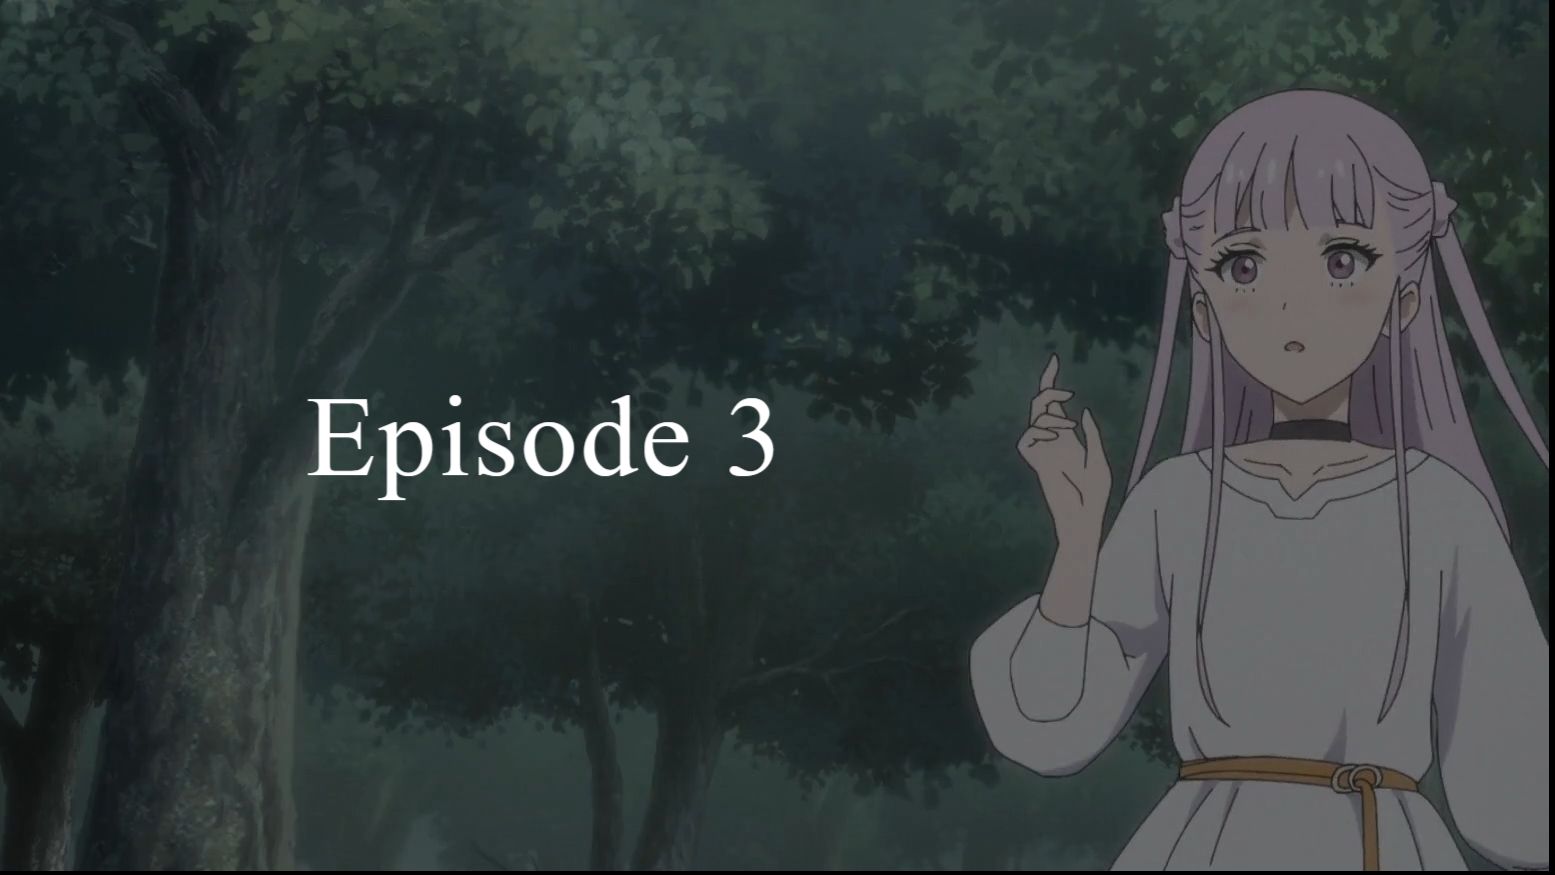 Ars no Kyojuu Episode 11 Preview 